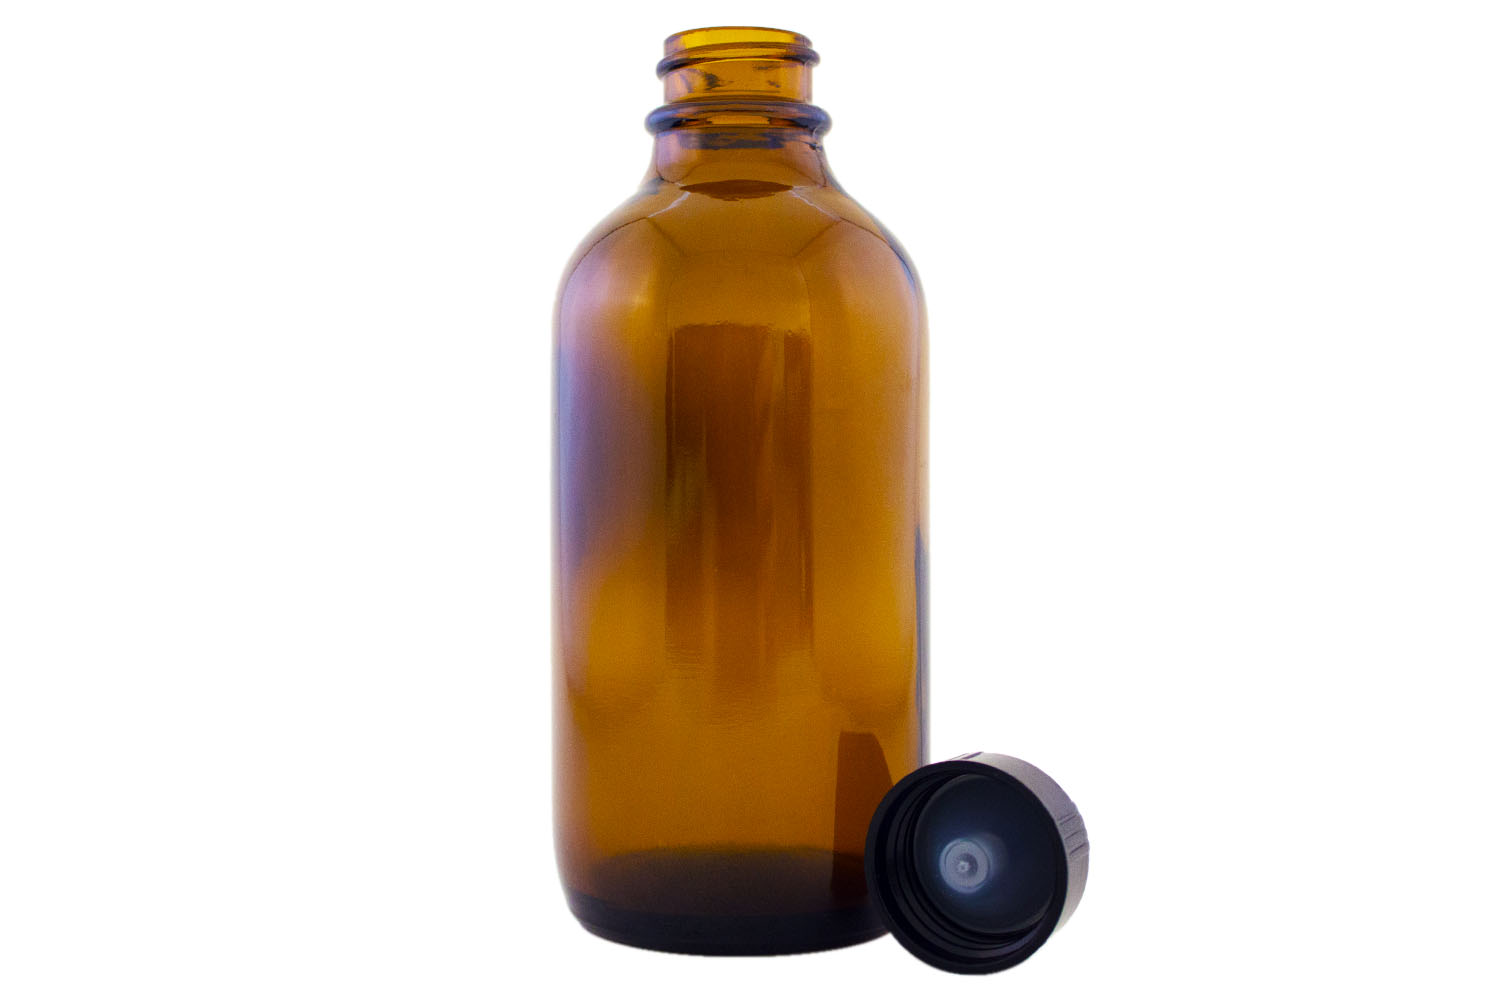 4oz amber glass bottle with phenolic lid